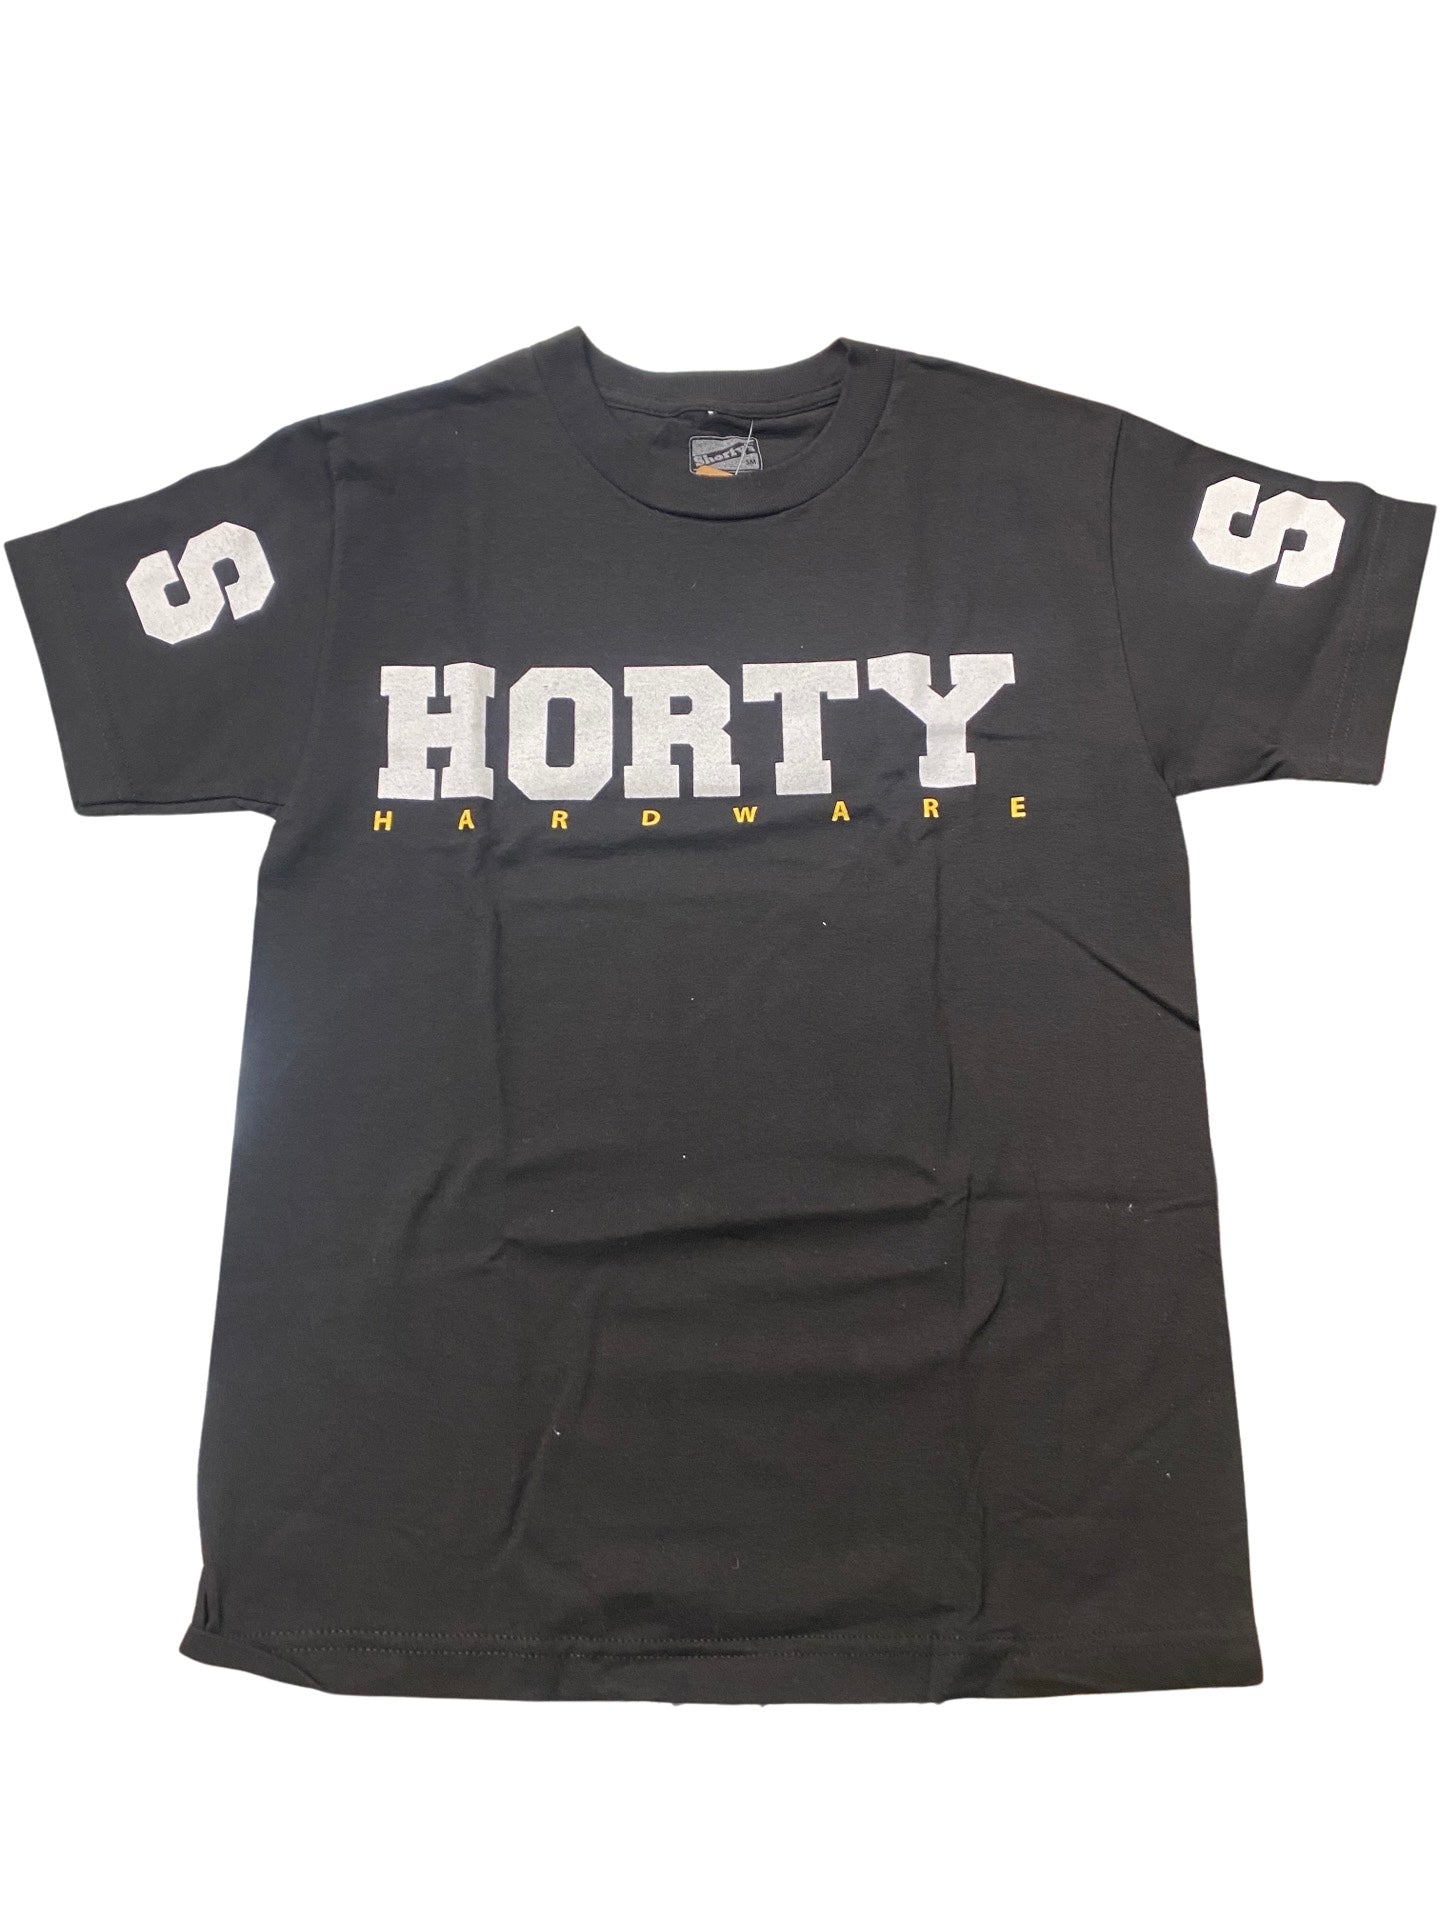 Shorty's S-HORTY-S T Shirt